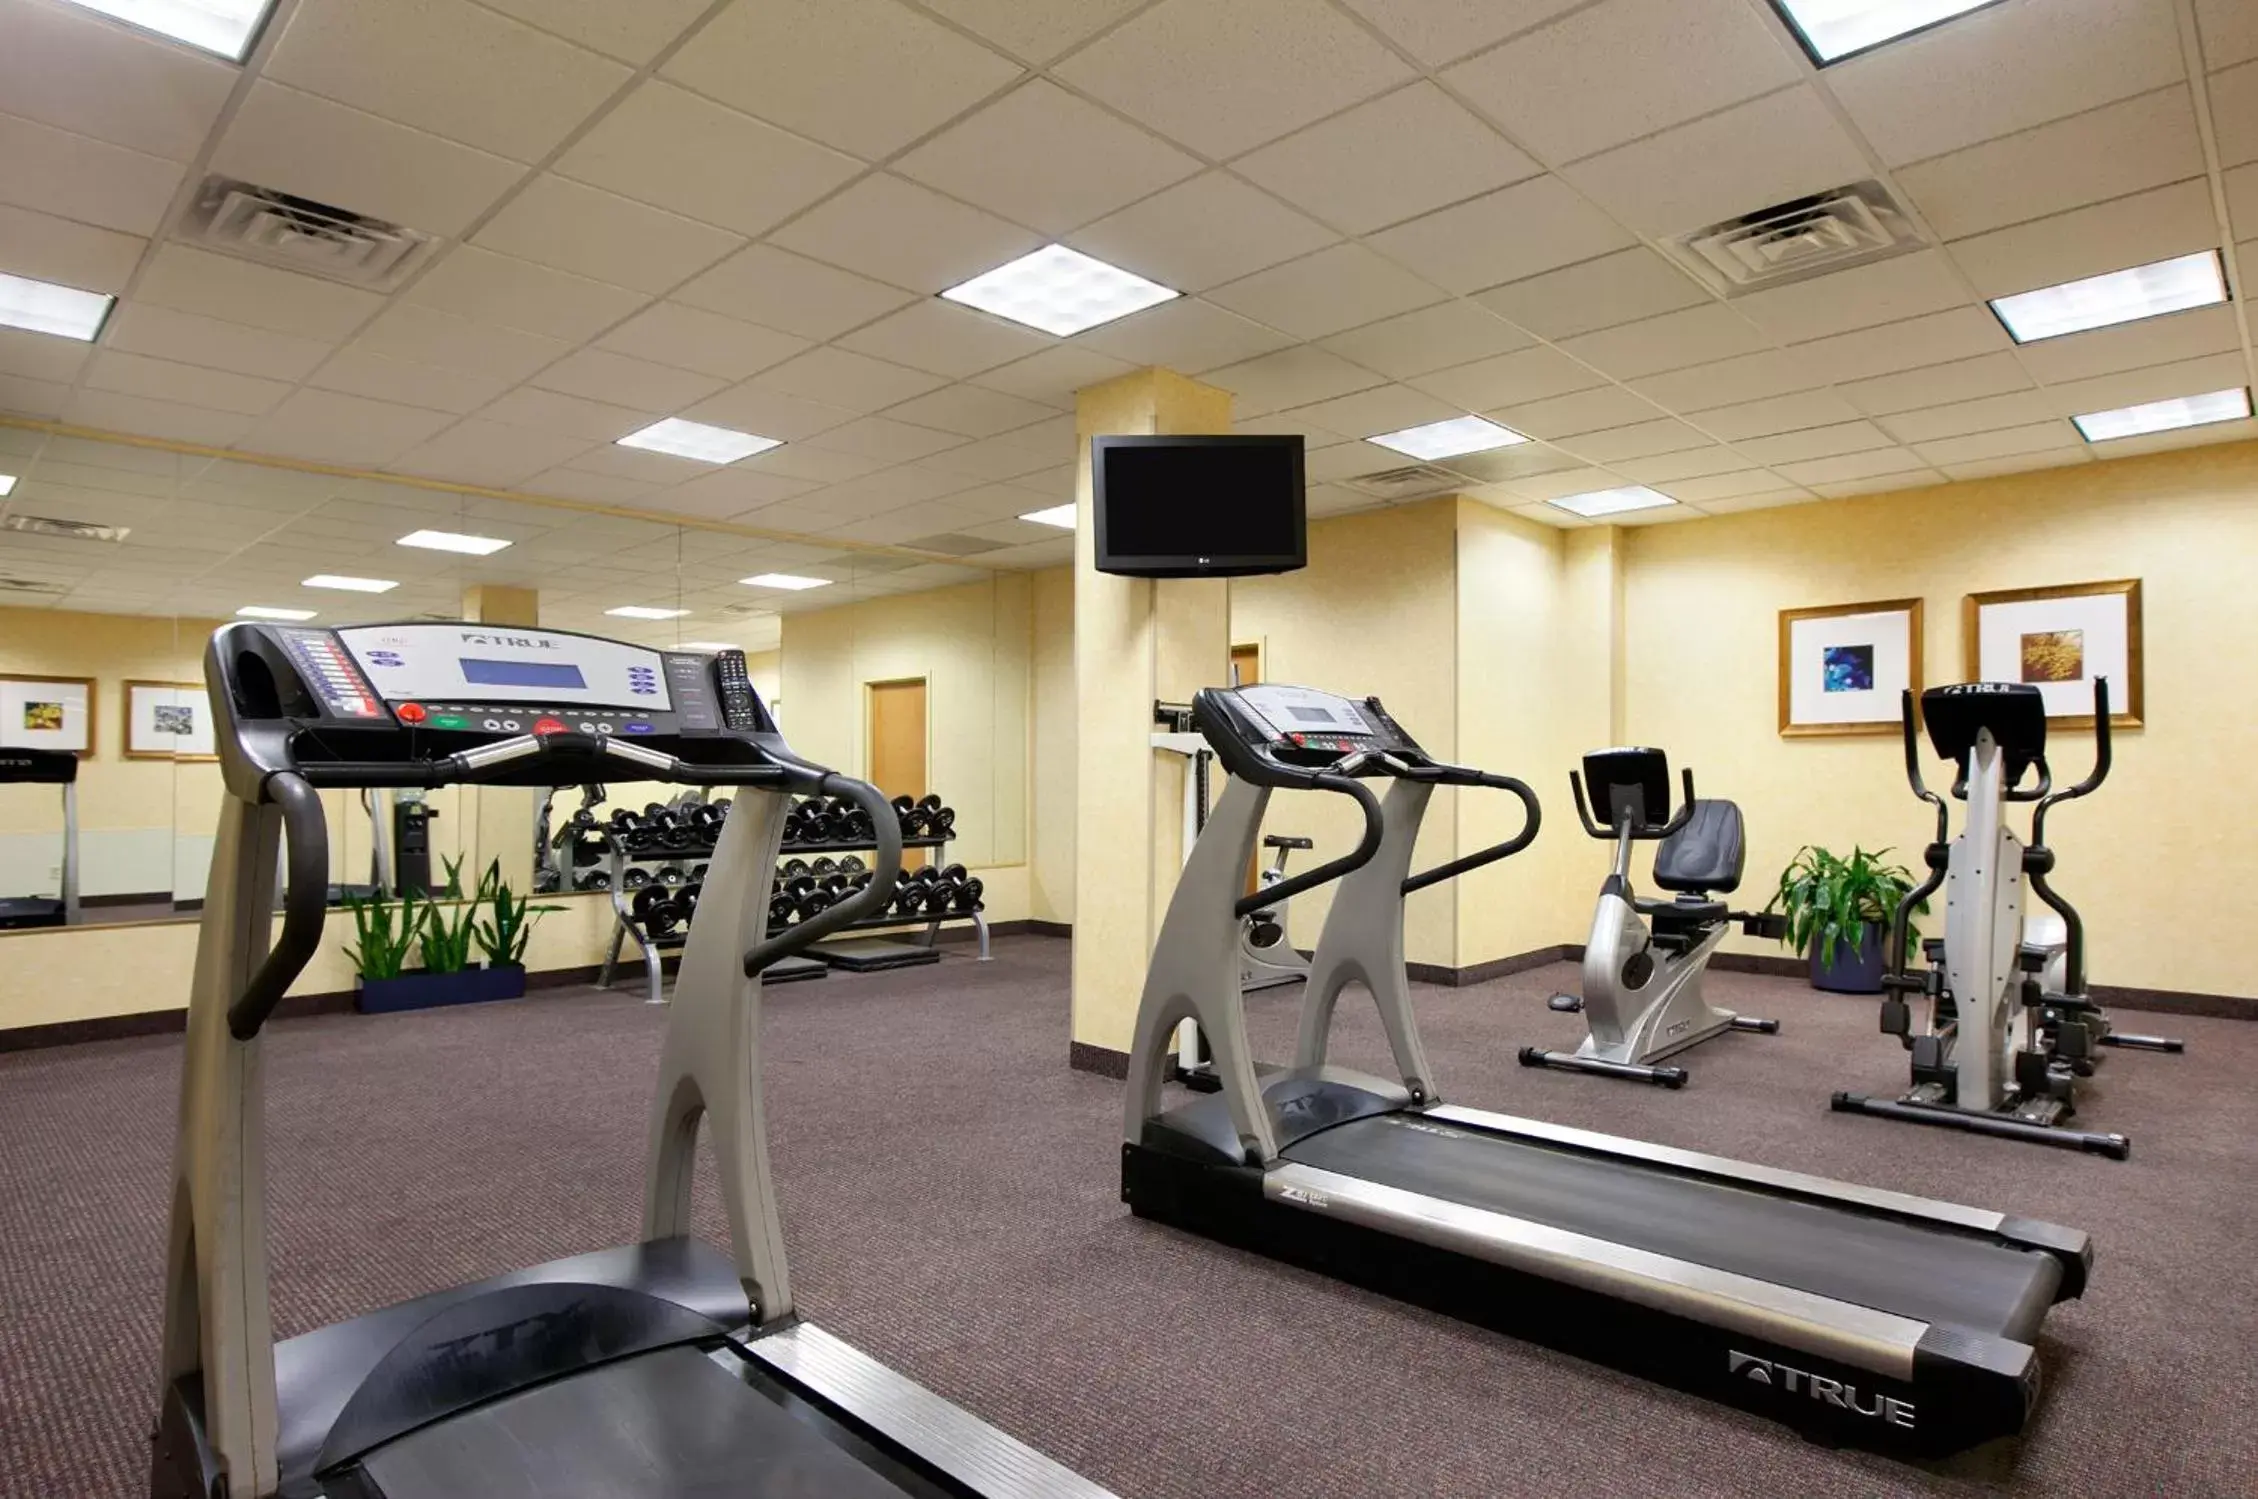 Fitness centre/facilities, Fitness Center/Facilities in Capitol Plaza Hotel Jefferson City